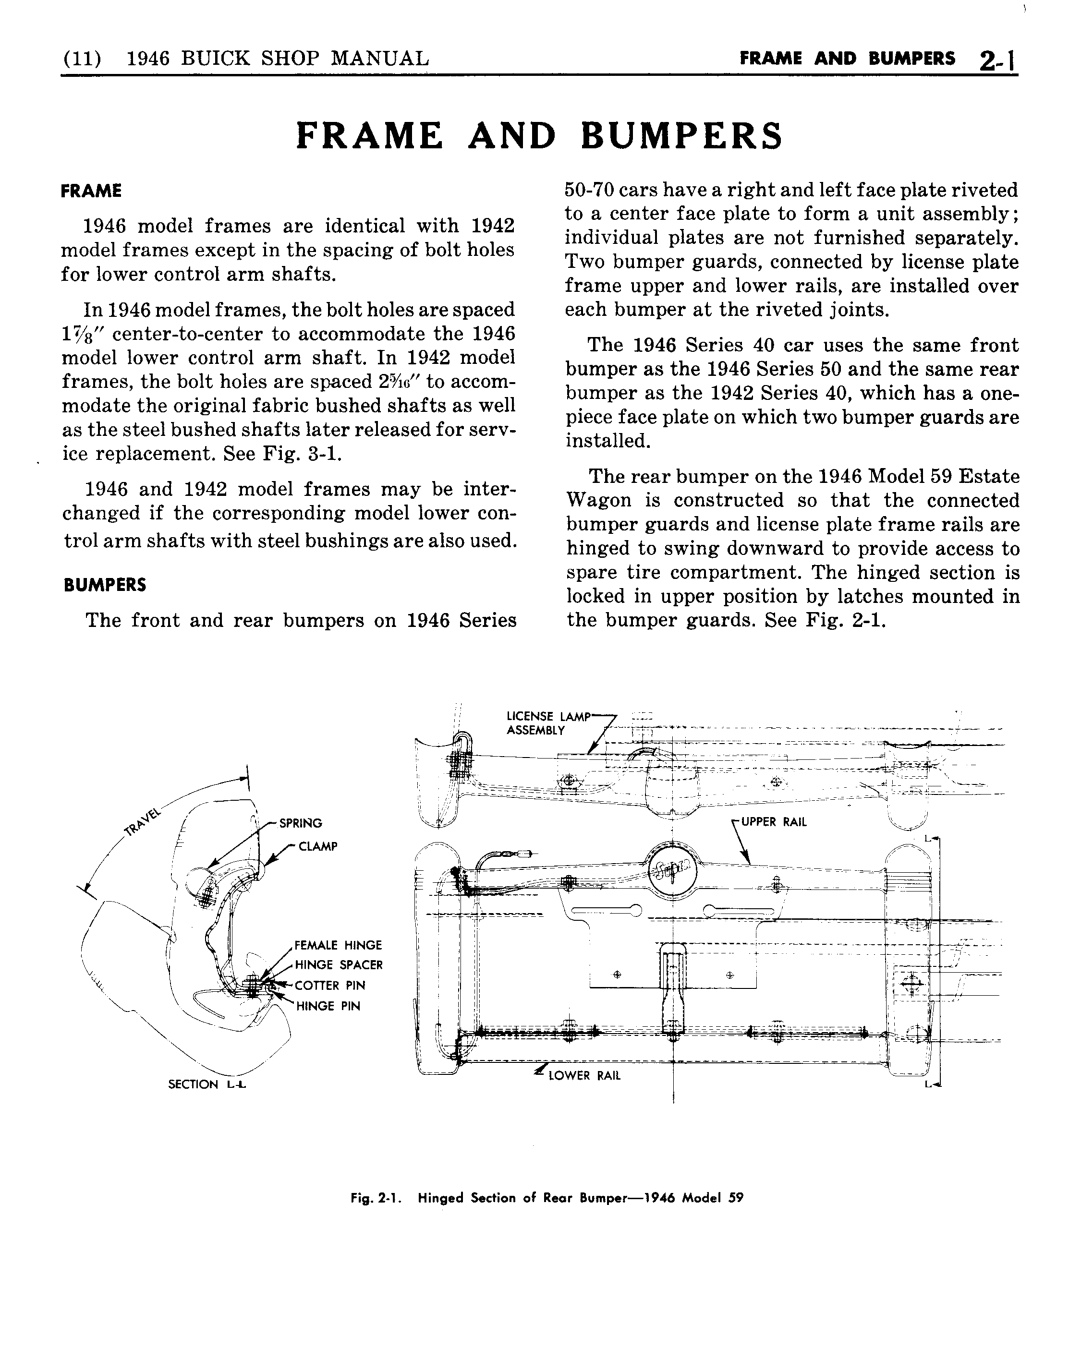 n_03 1946 Buick Shop Manual - Frame & Bumpers-001-001.jpg